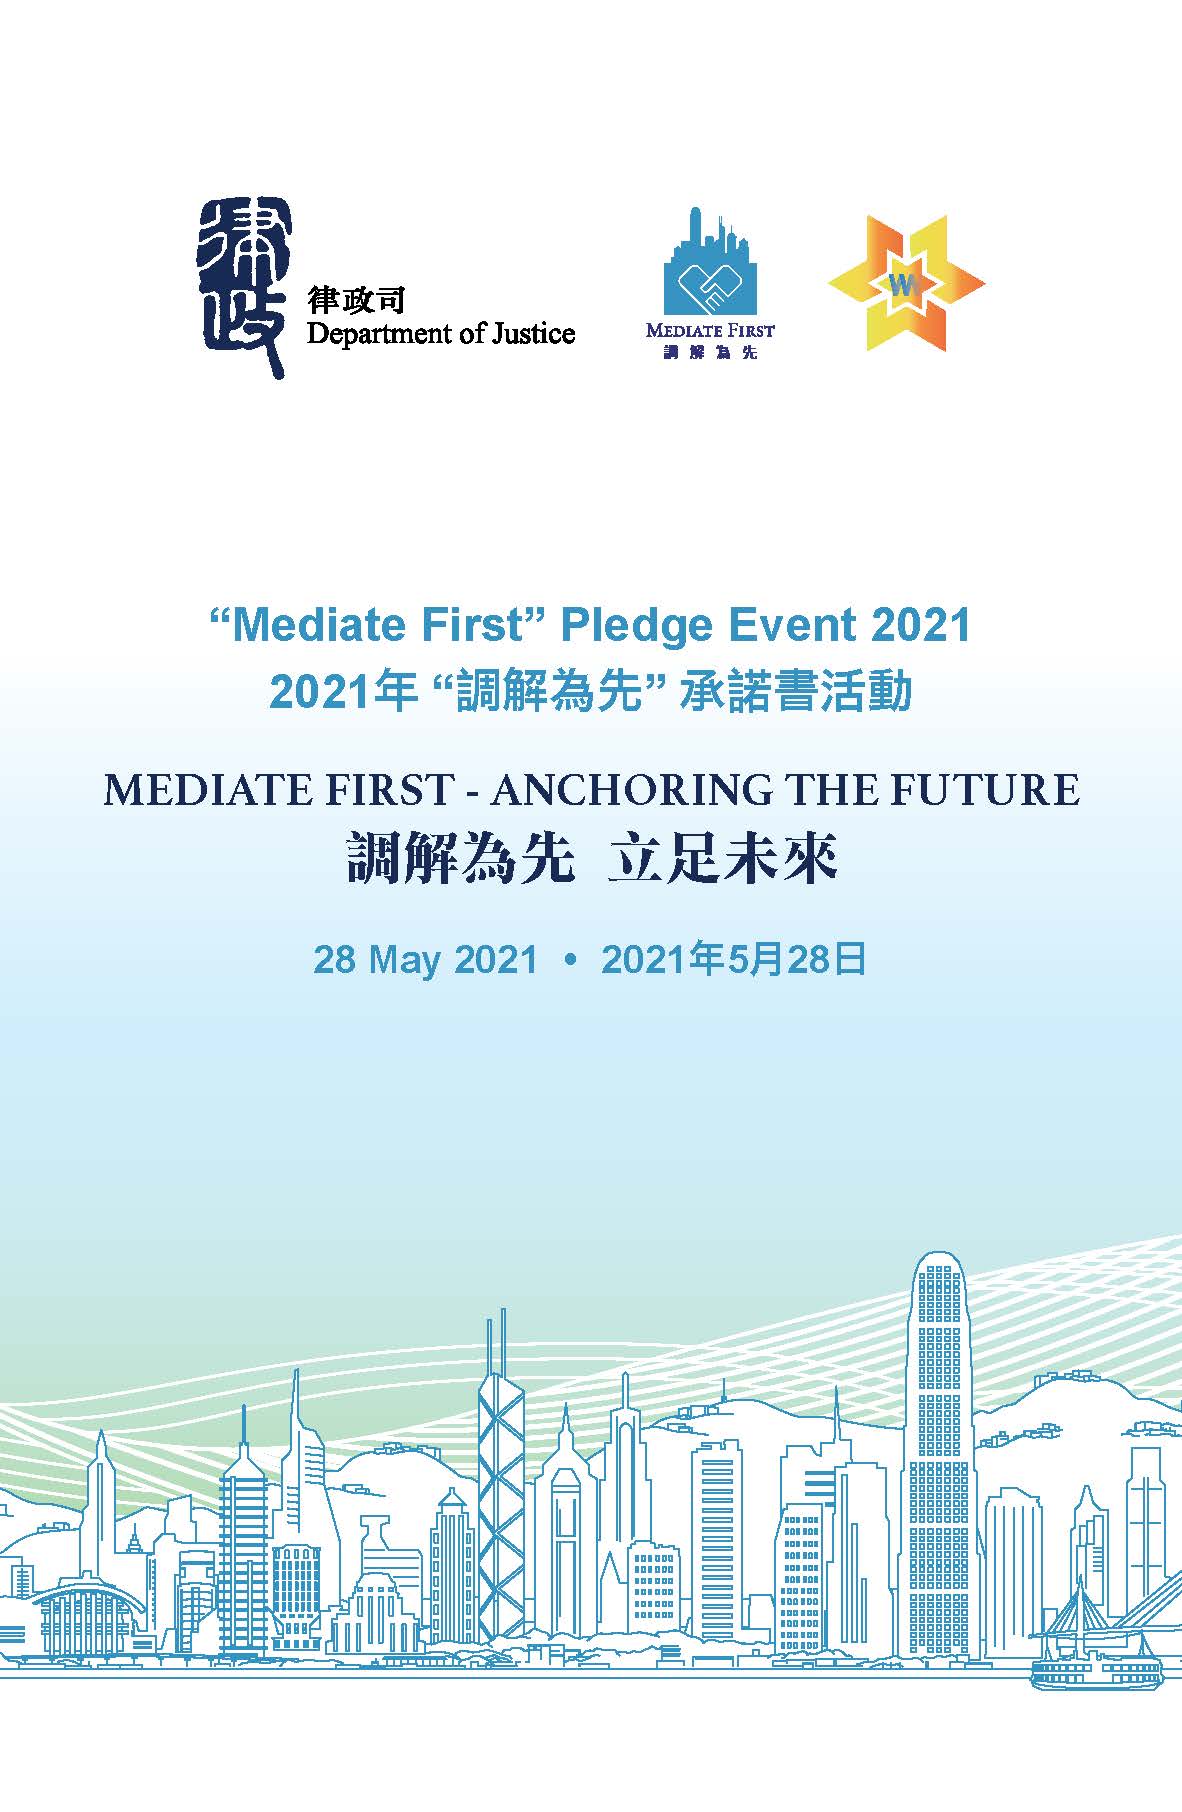 "Mediate First" Pledge Event 2021